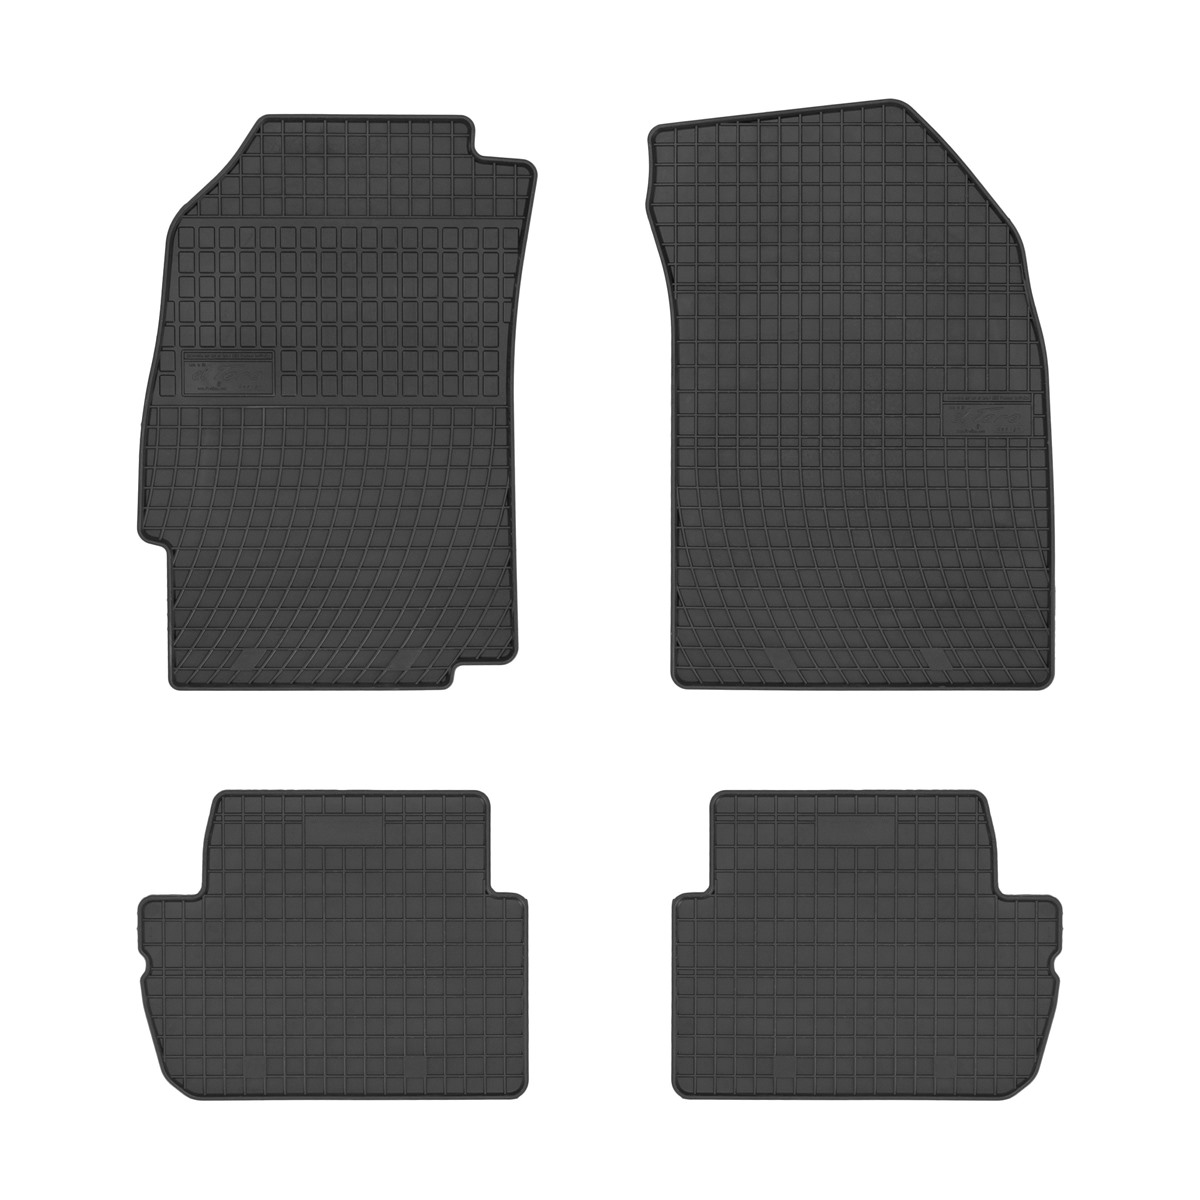 Rubber car mats for Chevrolet Spark 2009-2015 4pcs Frogum